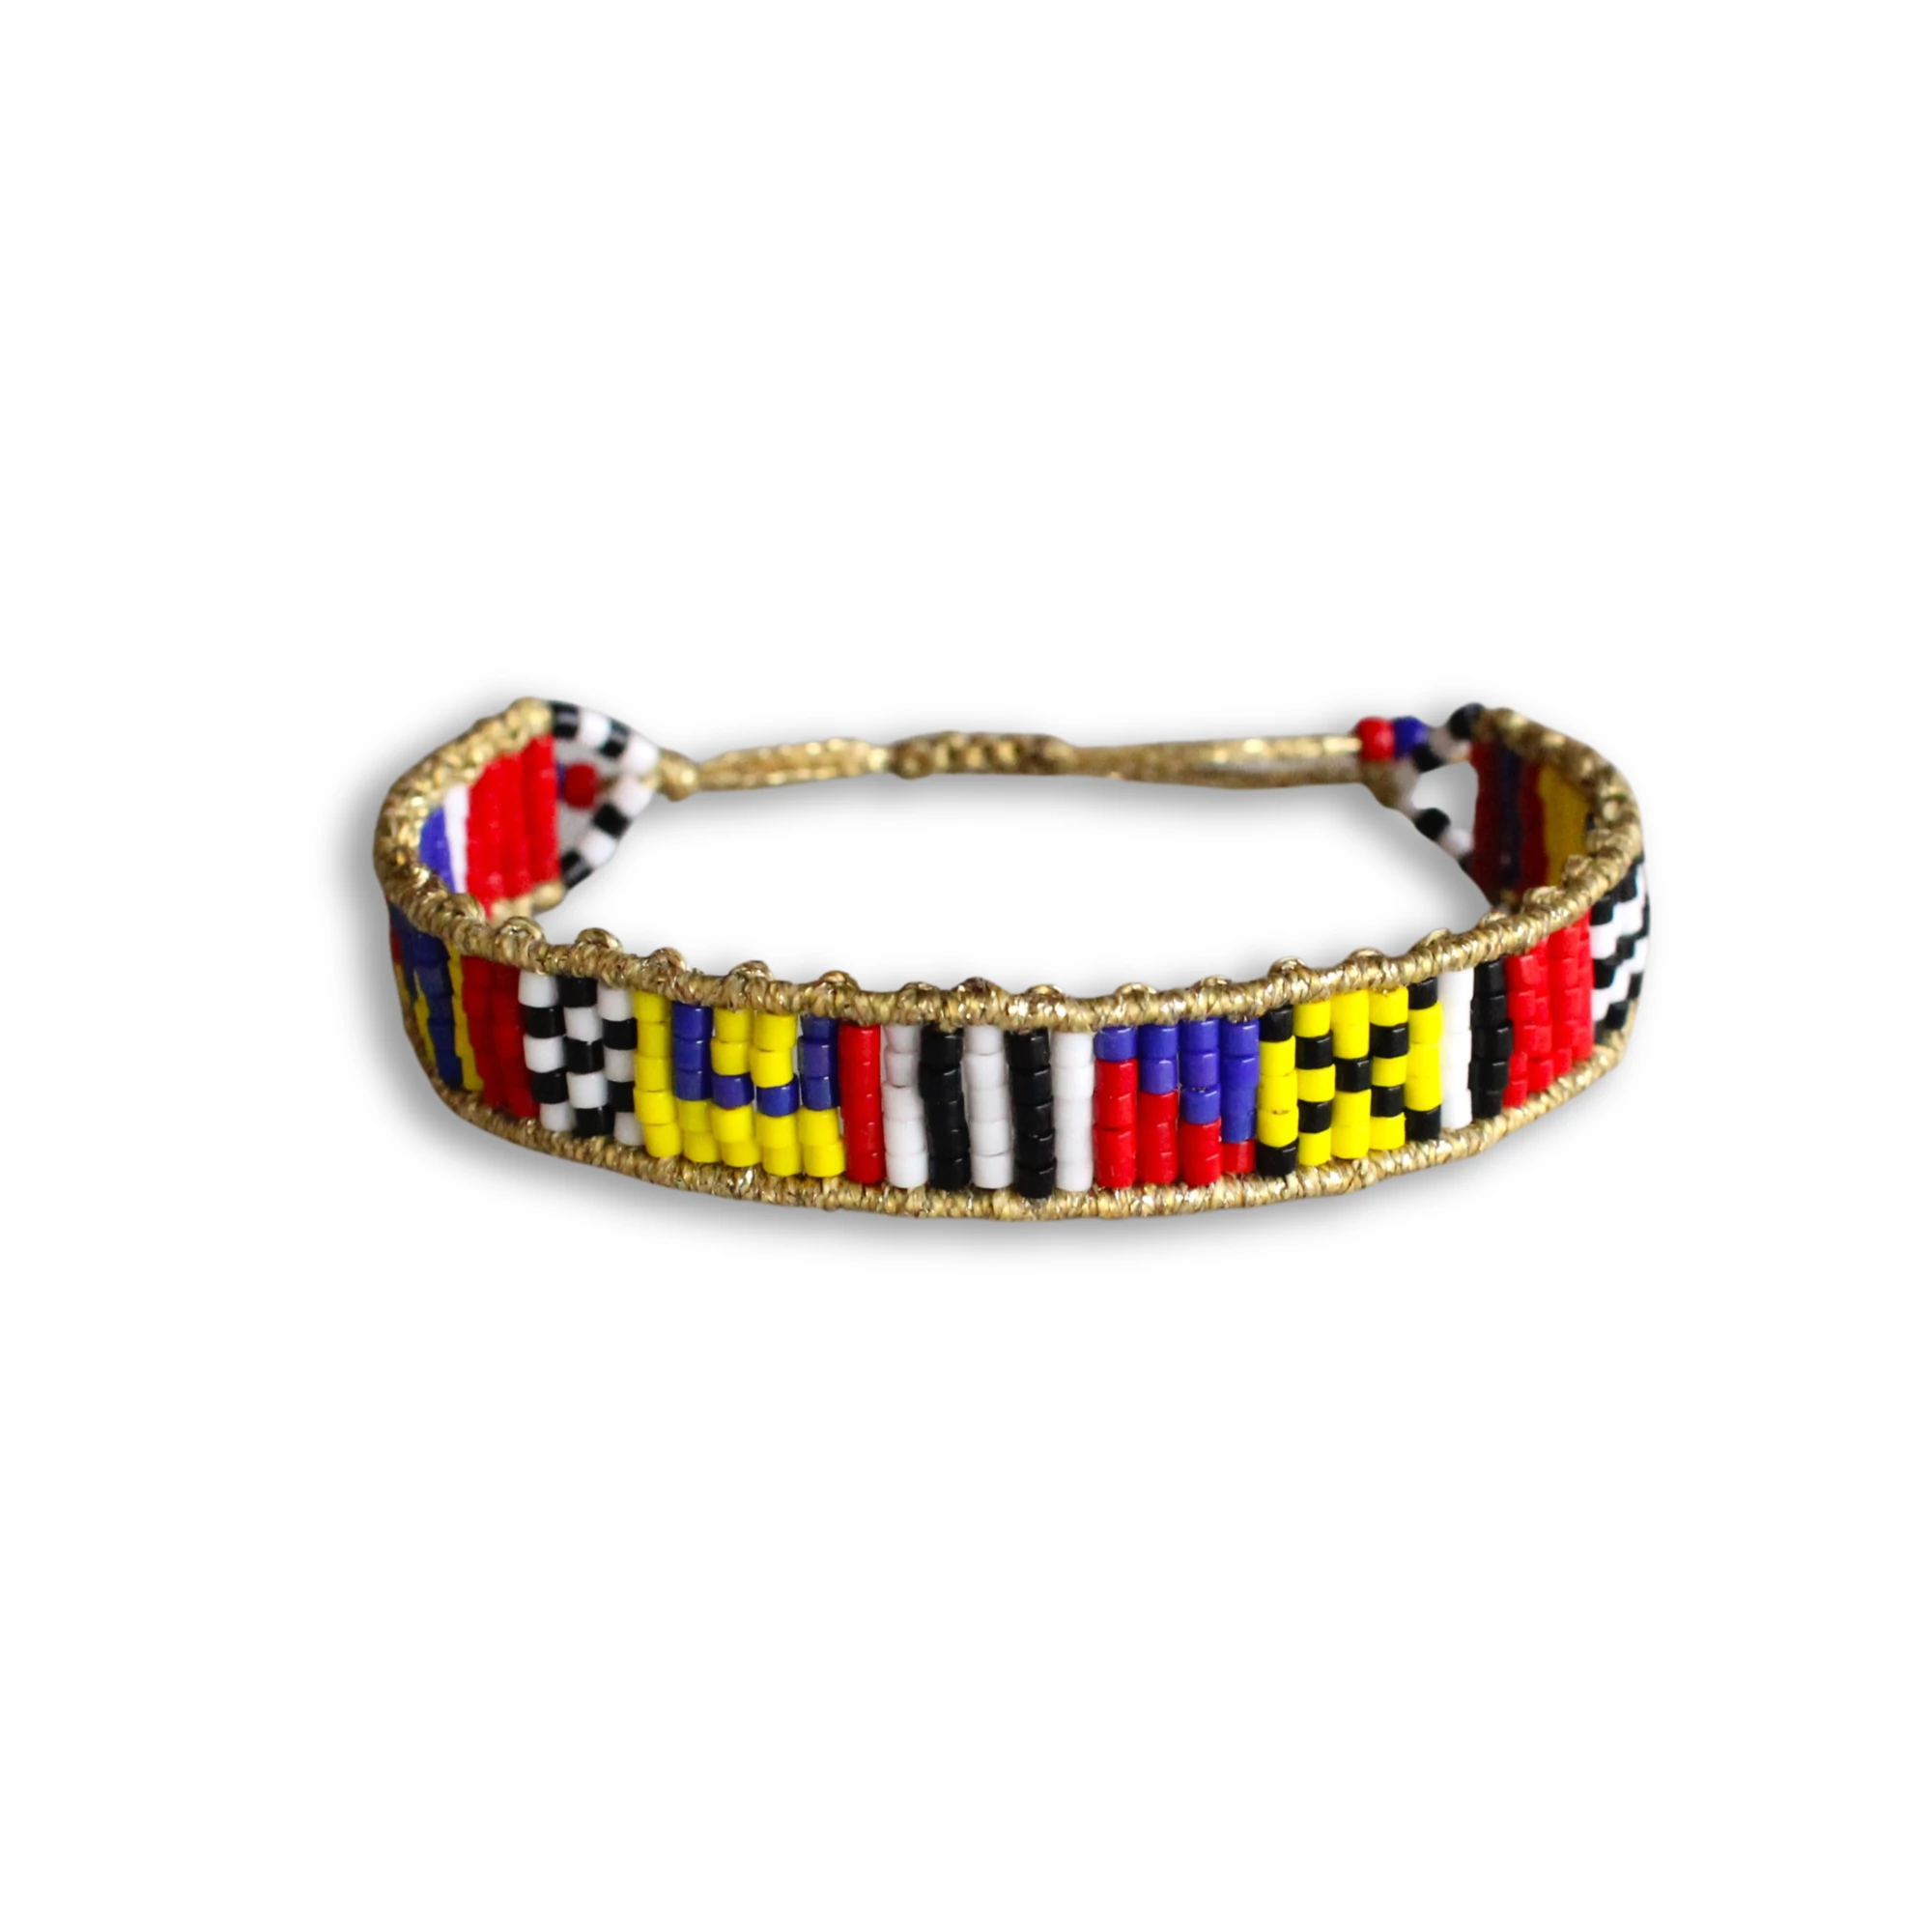 The “POP” Mosaic bracelet